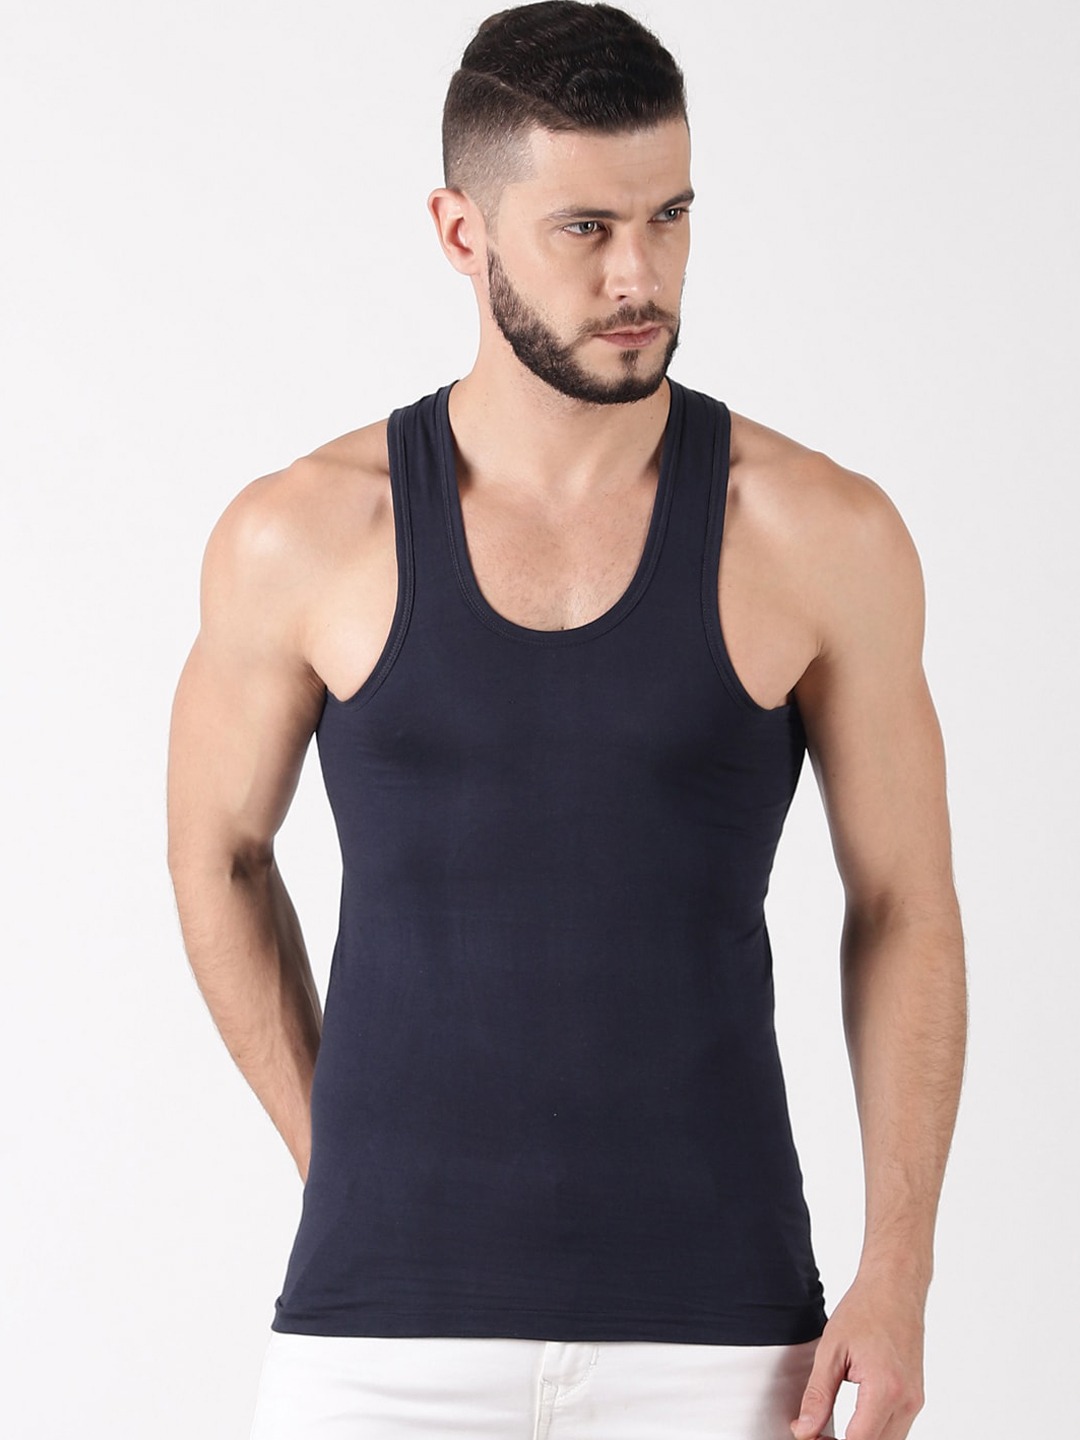 Clothing Innerwear Vests | Dollar Lehar Men Pack Of 5 Assorted Innerwear Vest MLHVE-01-PO5-ASST - OQ98182